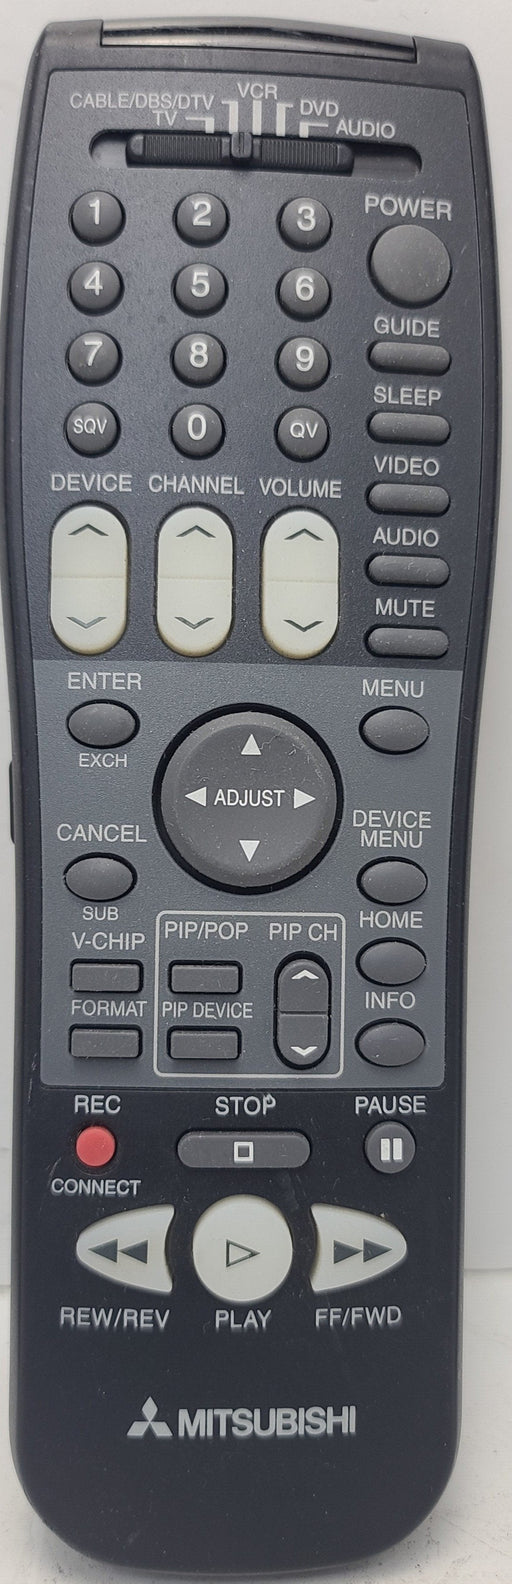 MITSUBISHI Cable TV DVD VCR Audio Remote Control EUR647007-Remote-SpenCertified-refurbished-vintage-electonics